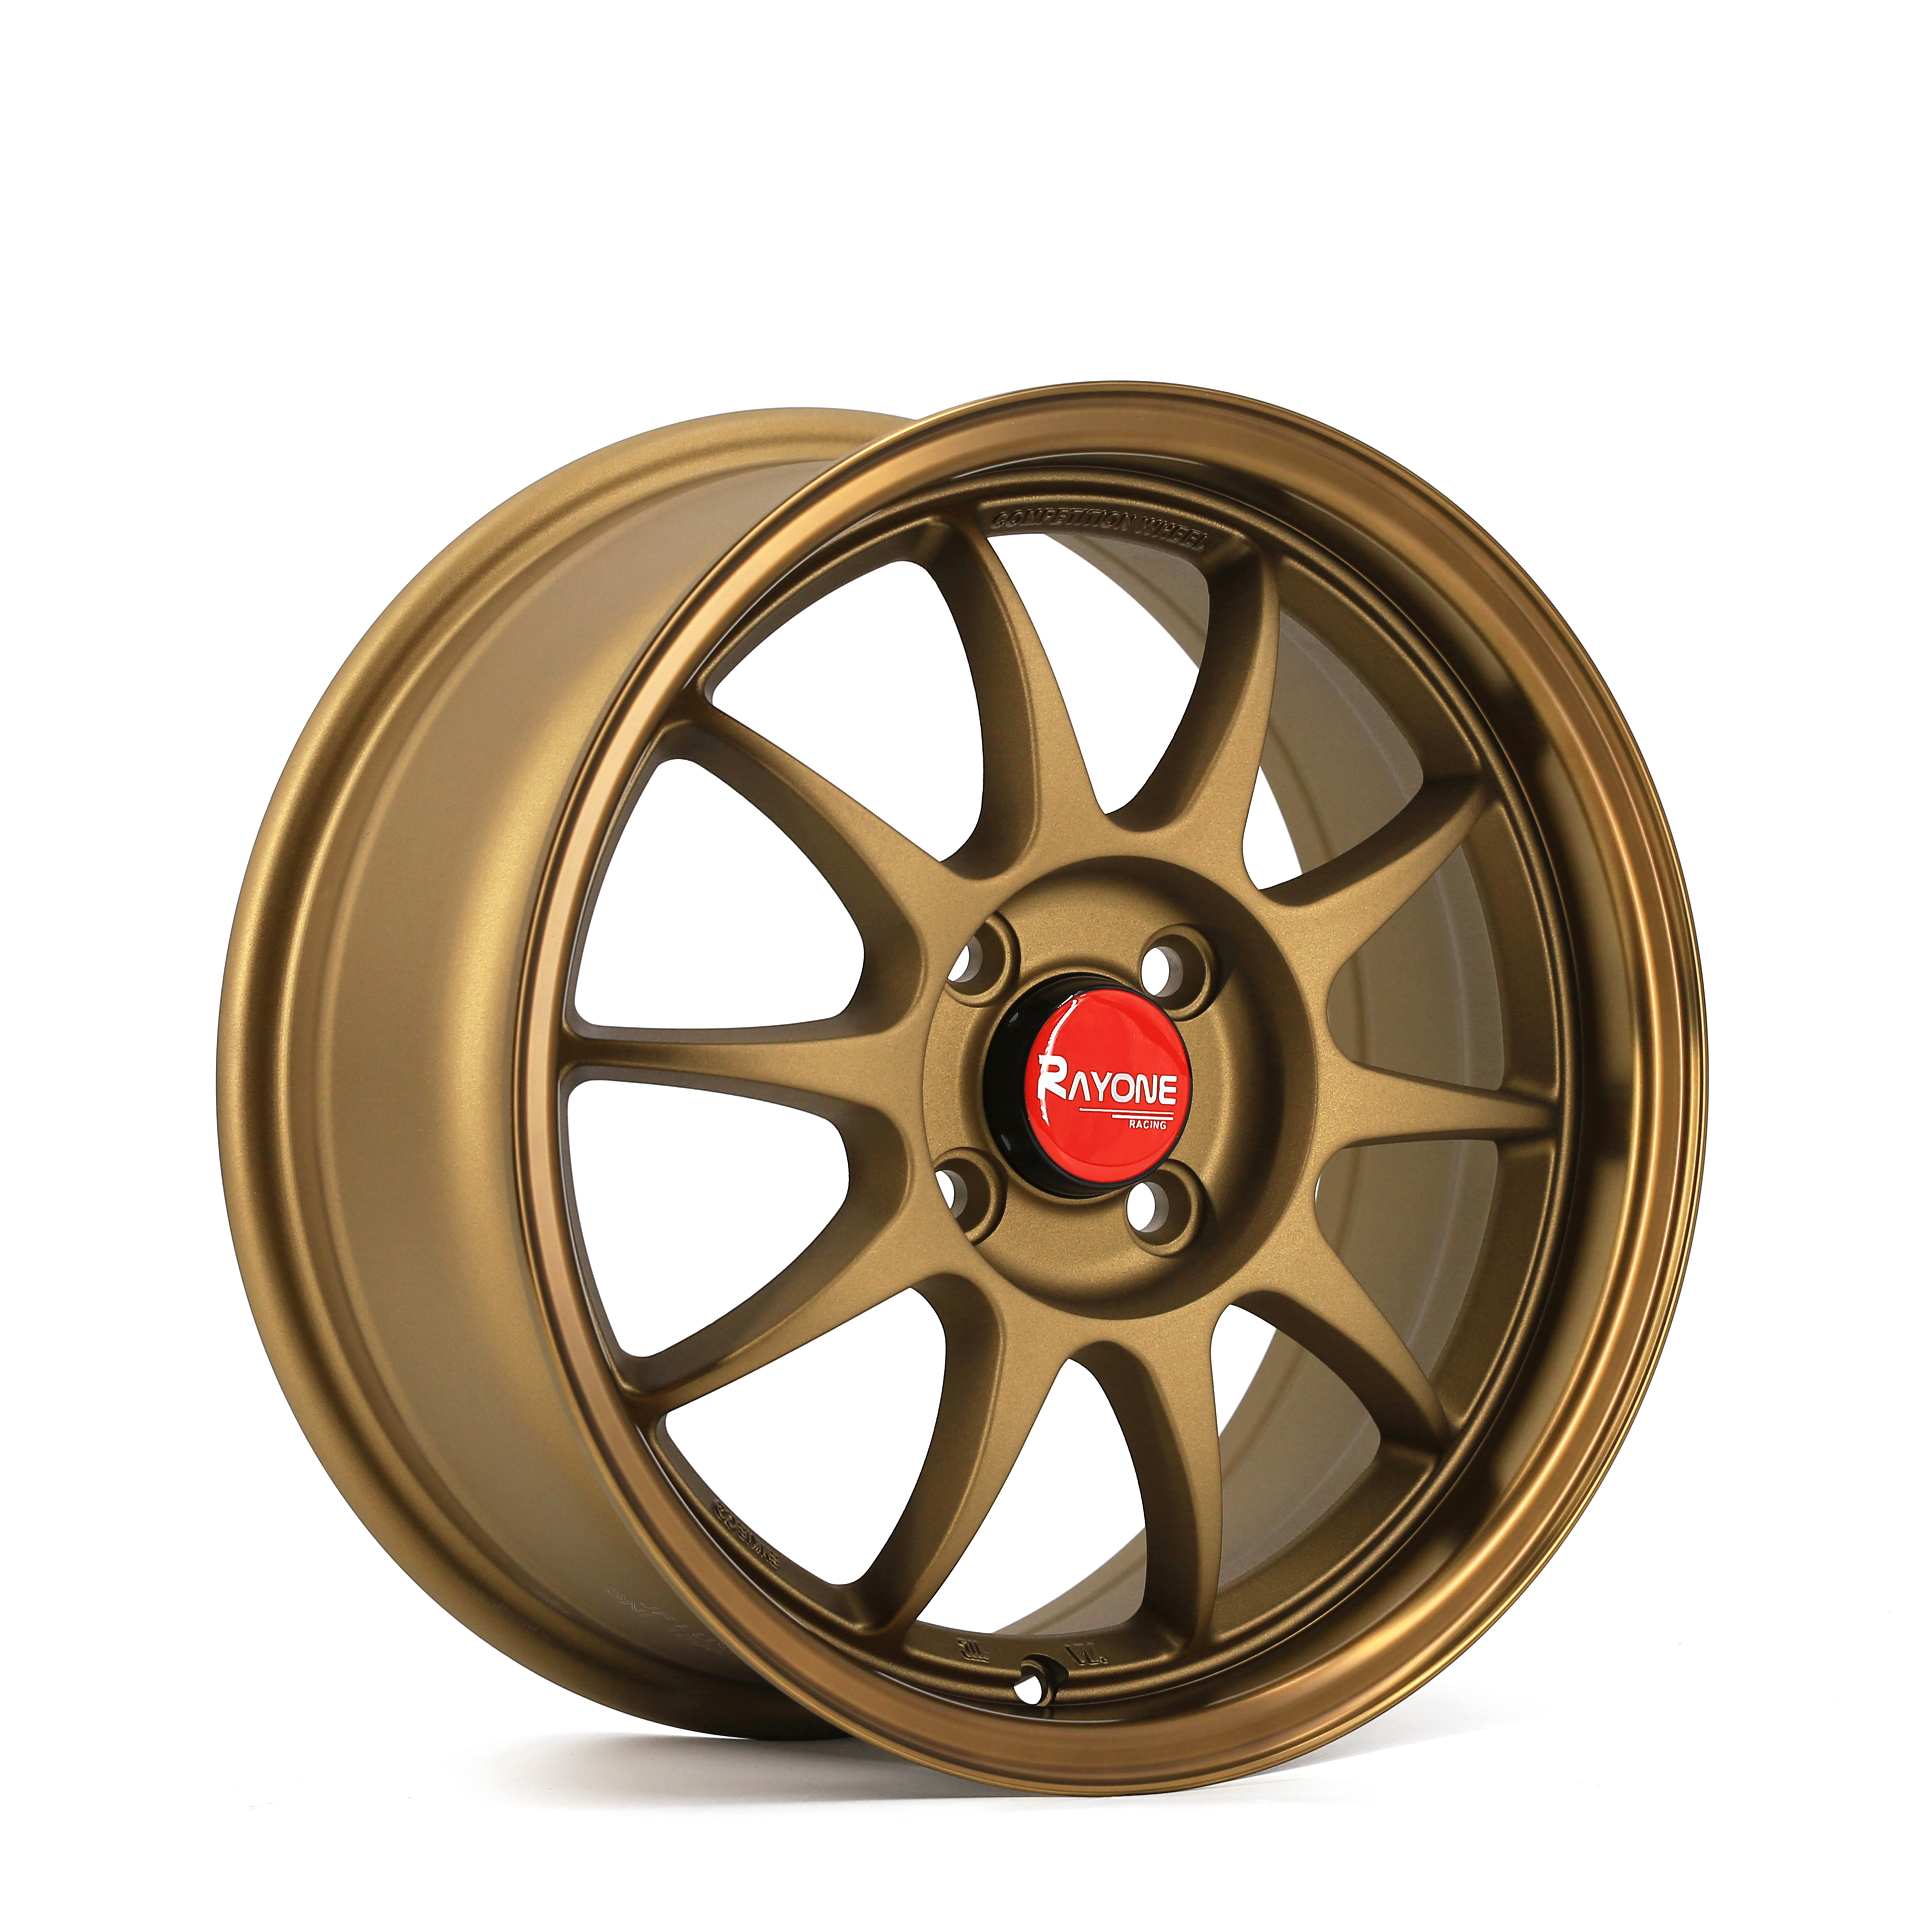 Rayone 681 Classical 10-Spoke Design 15inch Bronze Finish Car Alloy Wheels